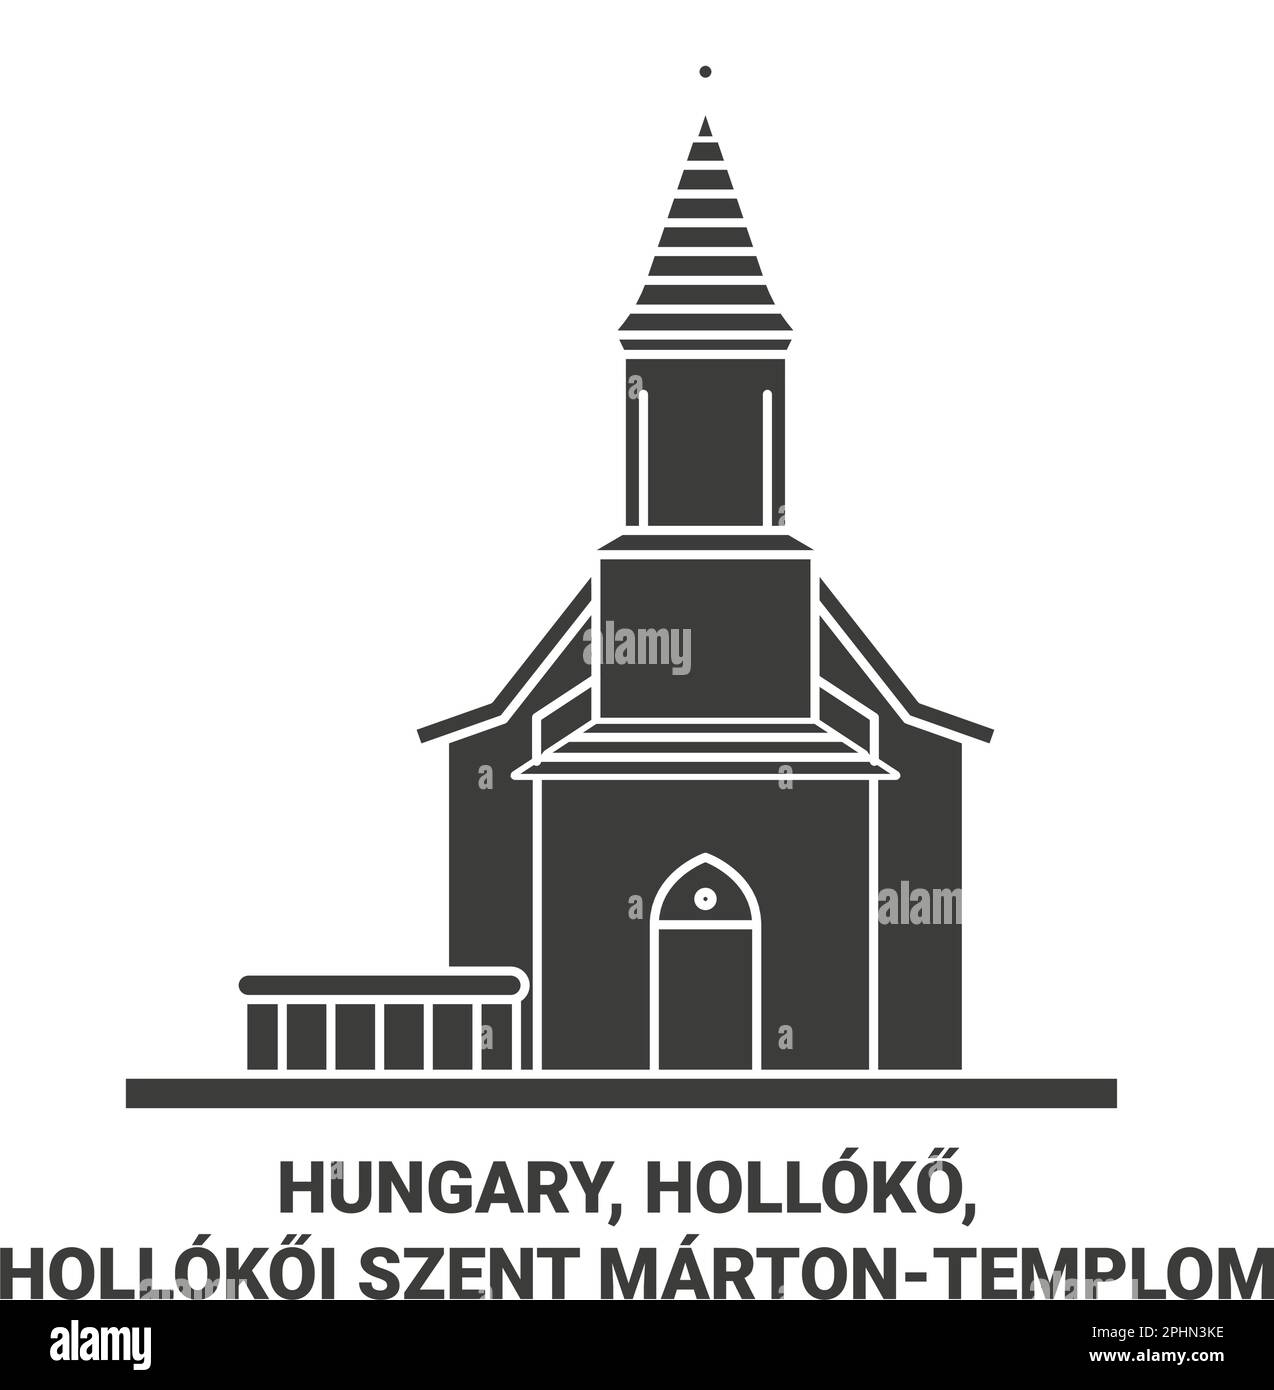 Hungary, Holloko, Hollokoi Szent Martontemplom travel landmark vector illustration Stock Vector